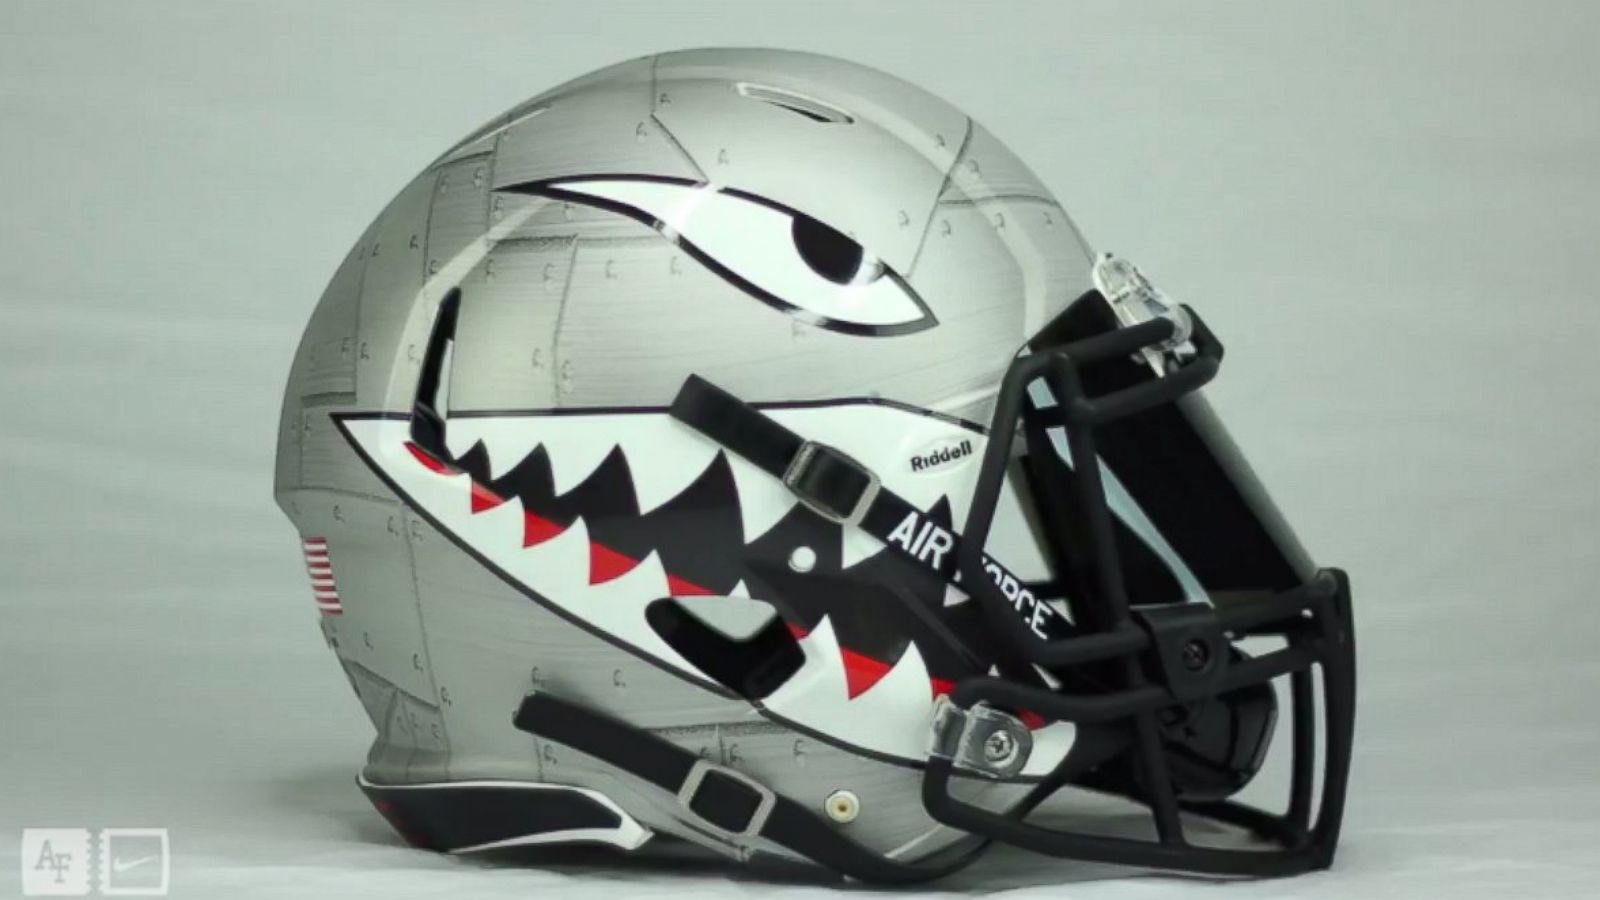 New Air Force Helmets Highlight Historic 'Sharktooth' Design News